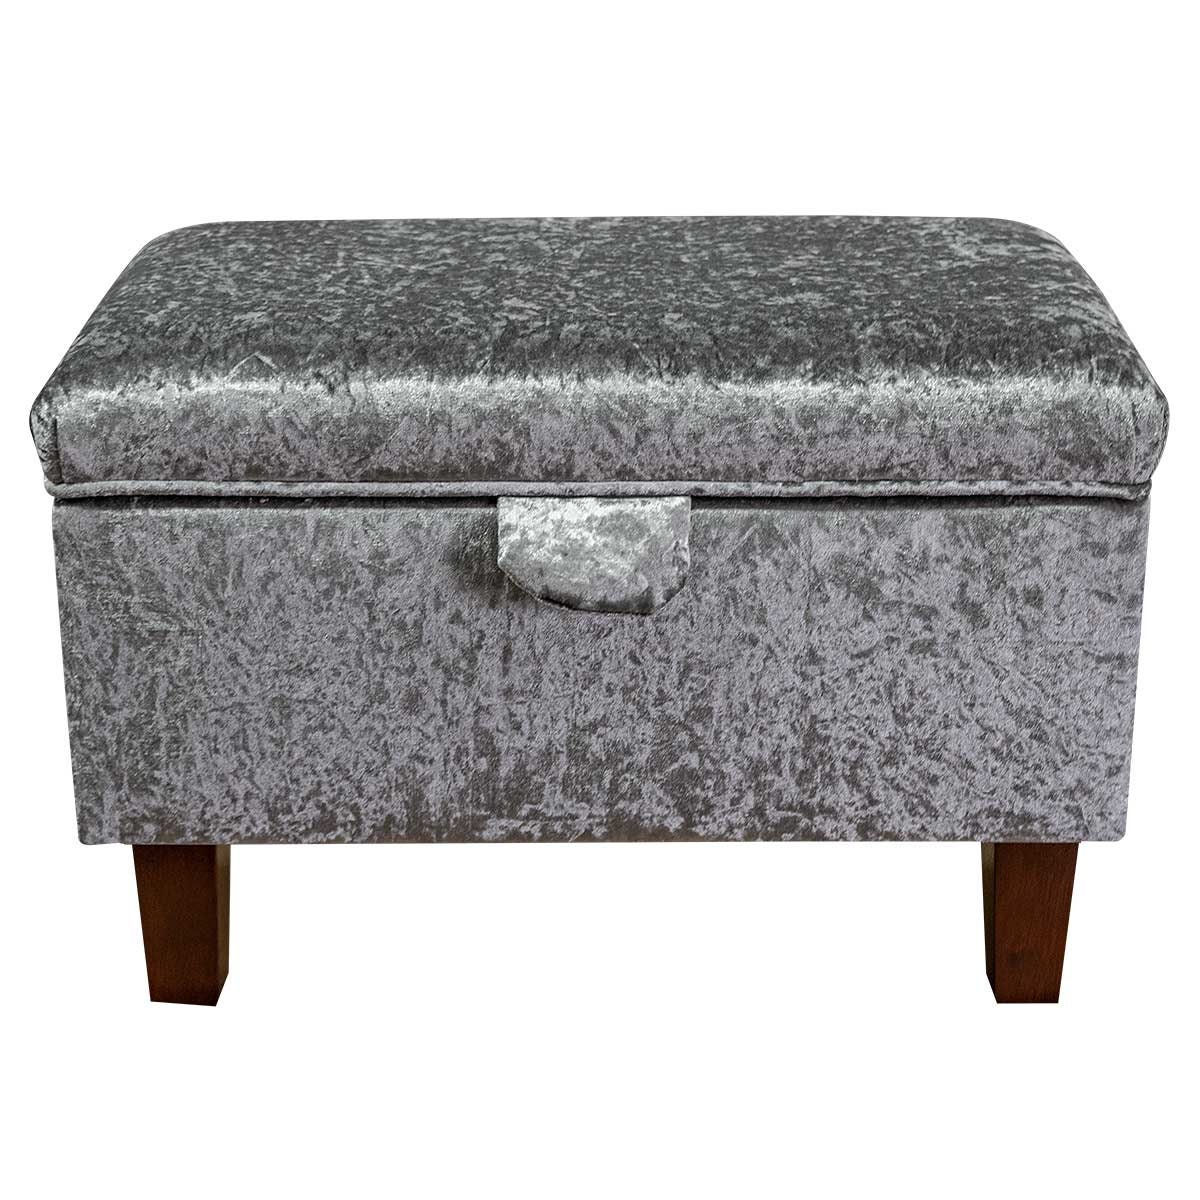 Silver Crushed Velvet Handmade Storage Ottoman Footstool   Etsy.de